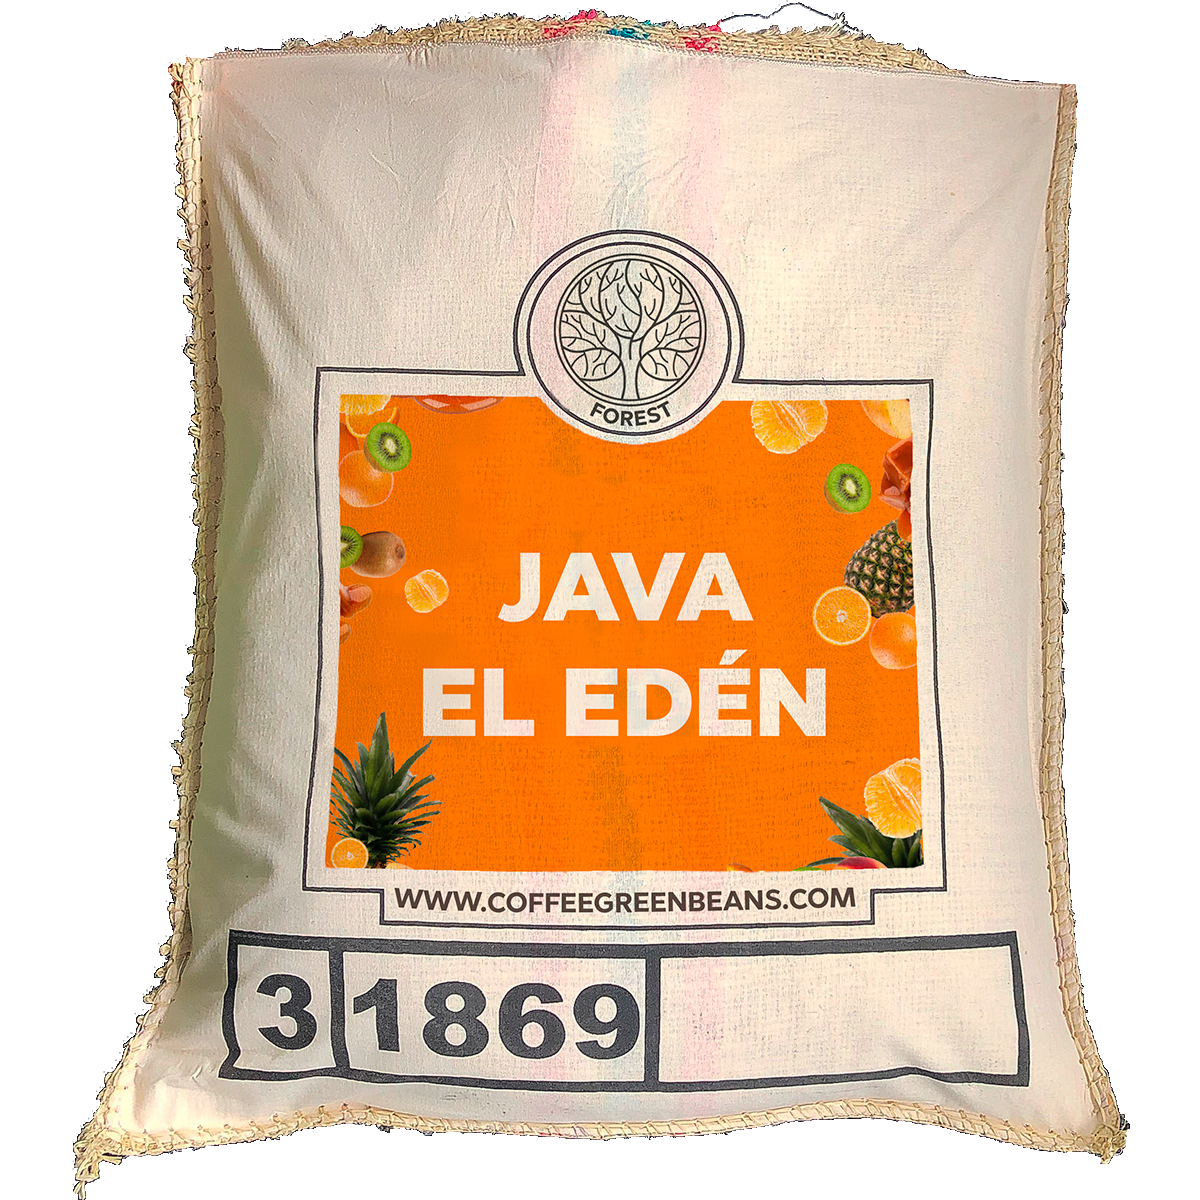 JAVA EL EDEN - Forest Coffee 